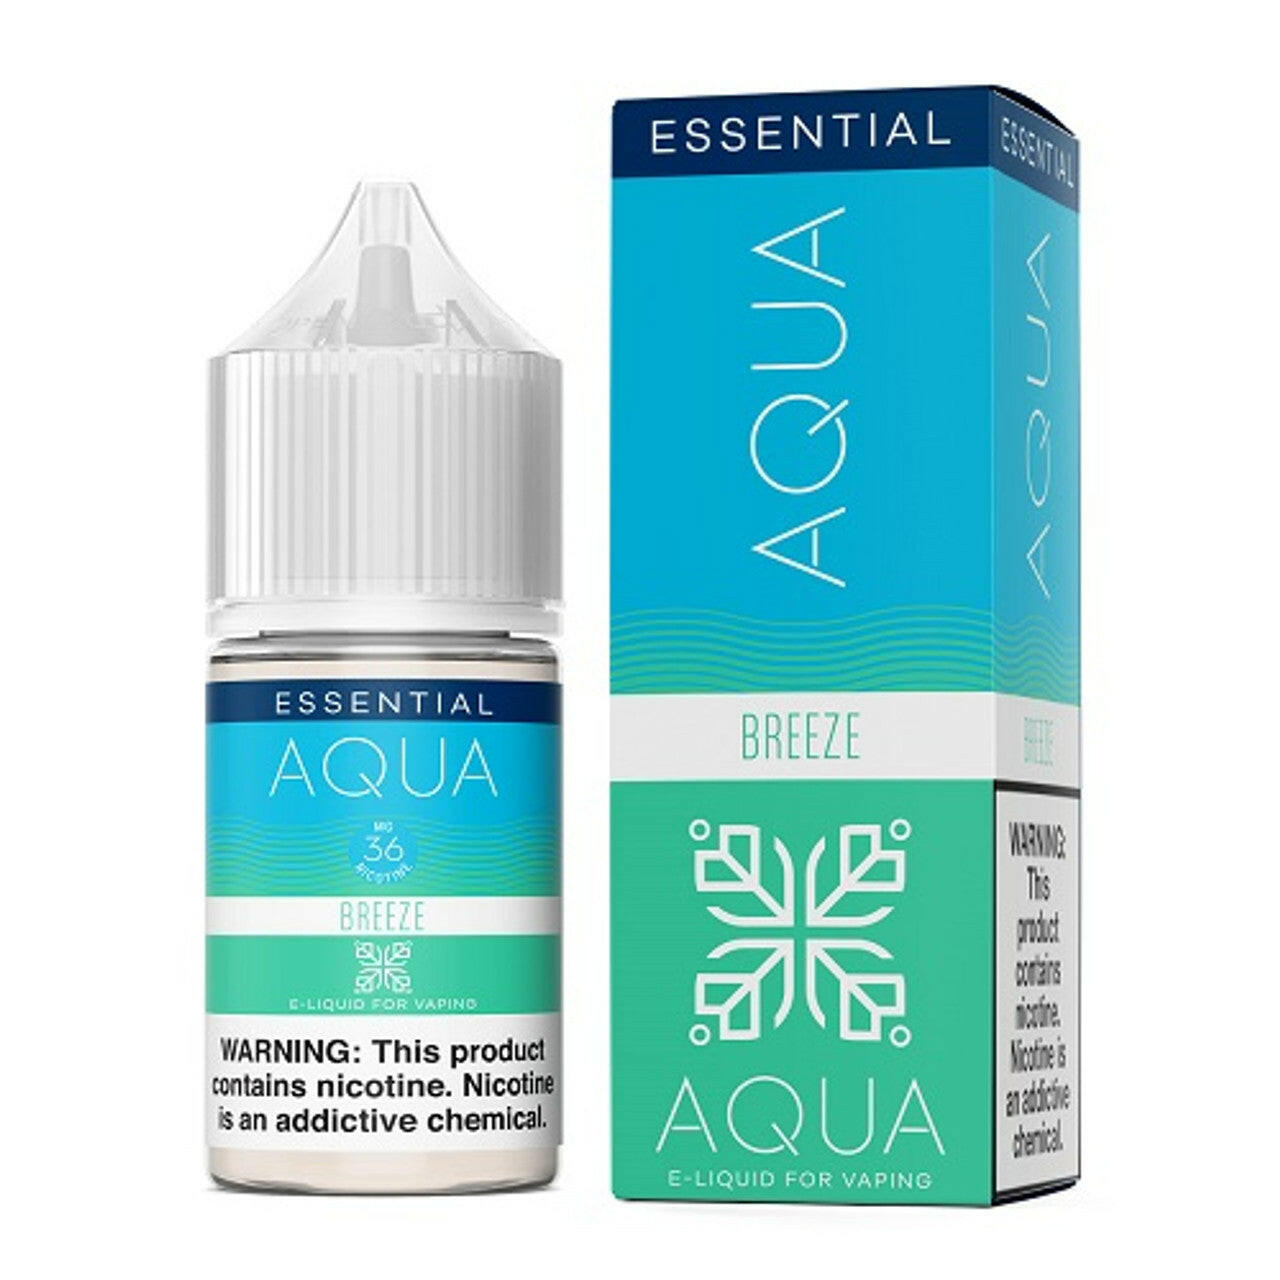 Aqua Essential Nicotine Salt E-Liquid By Marina Vape 30ML Breeze